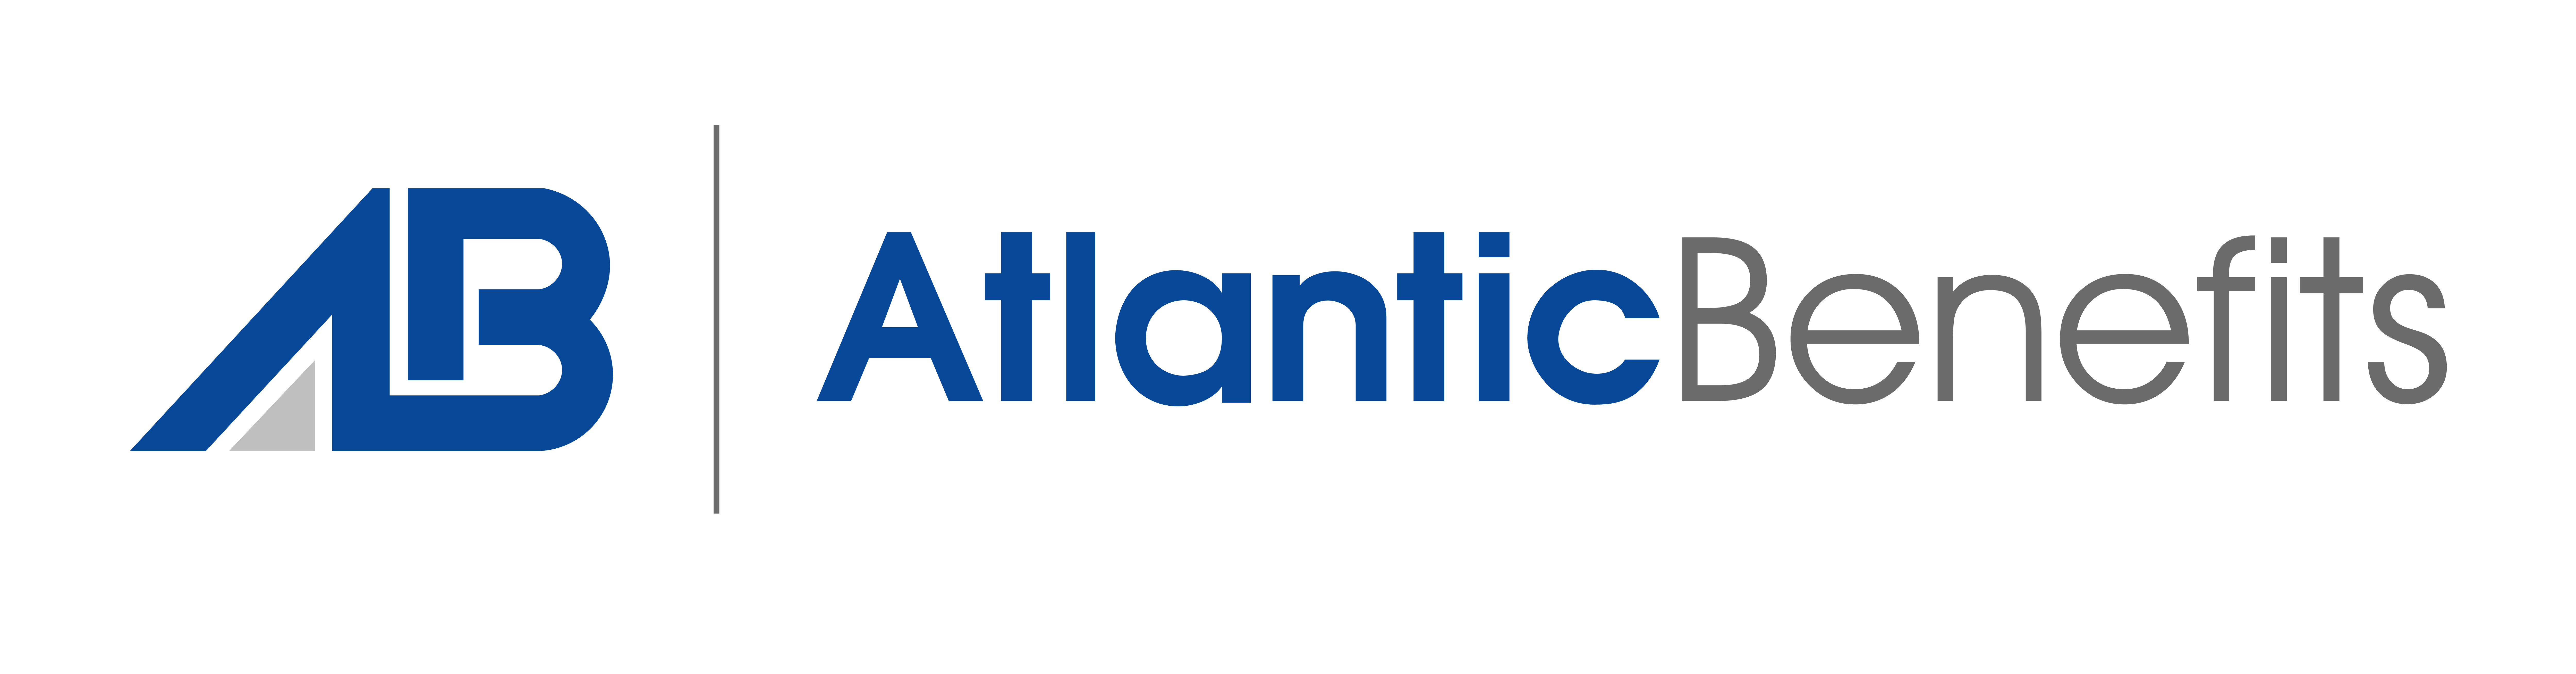 Atlantic Benefits Company